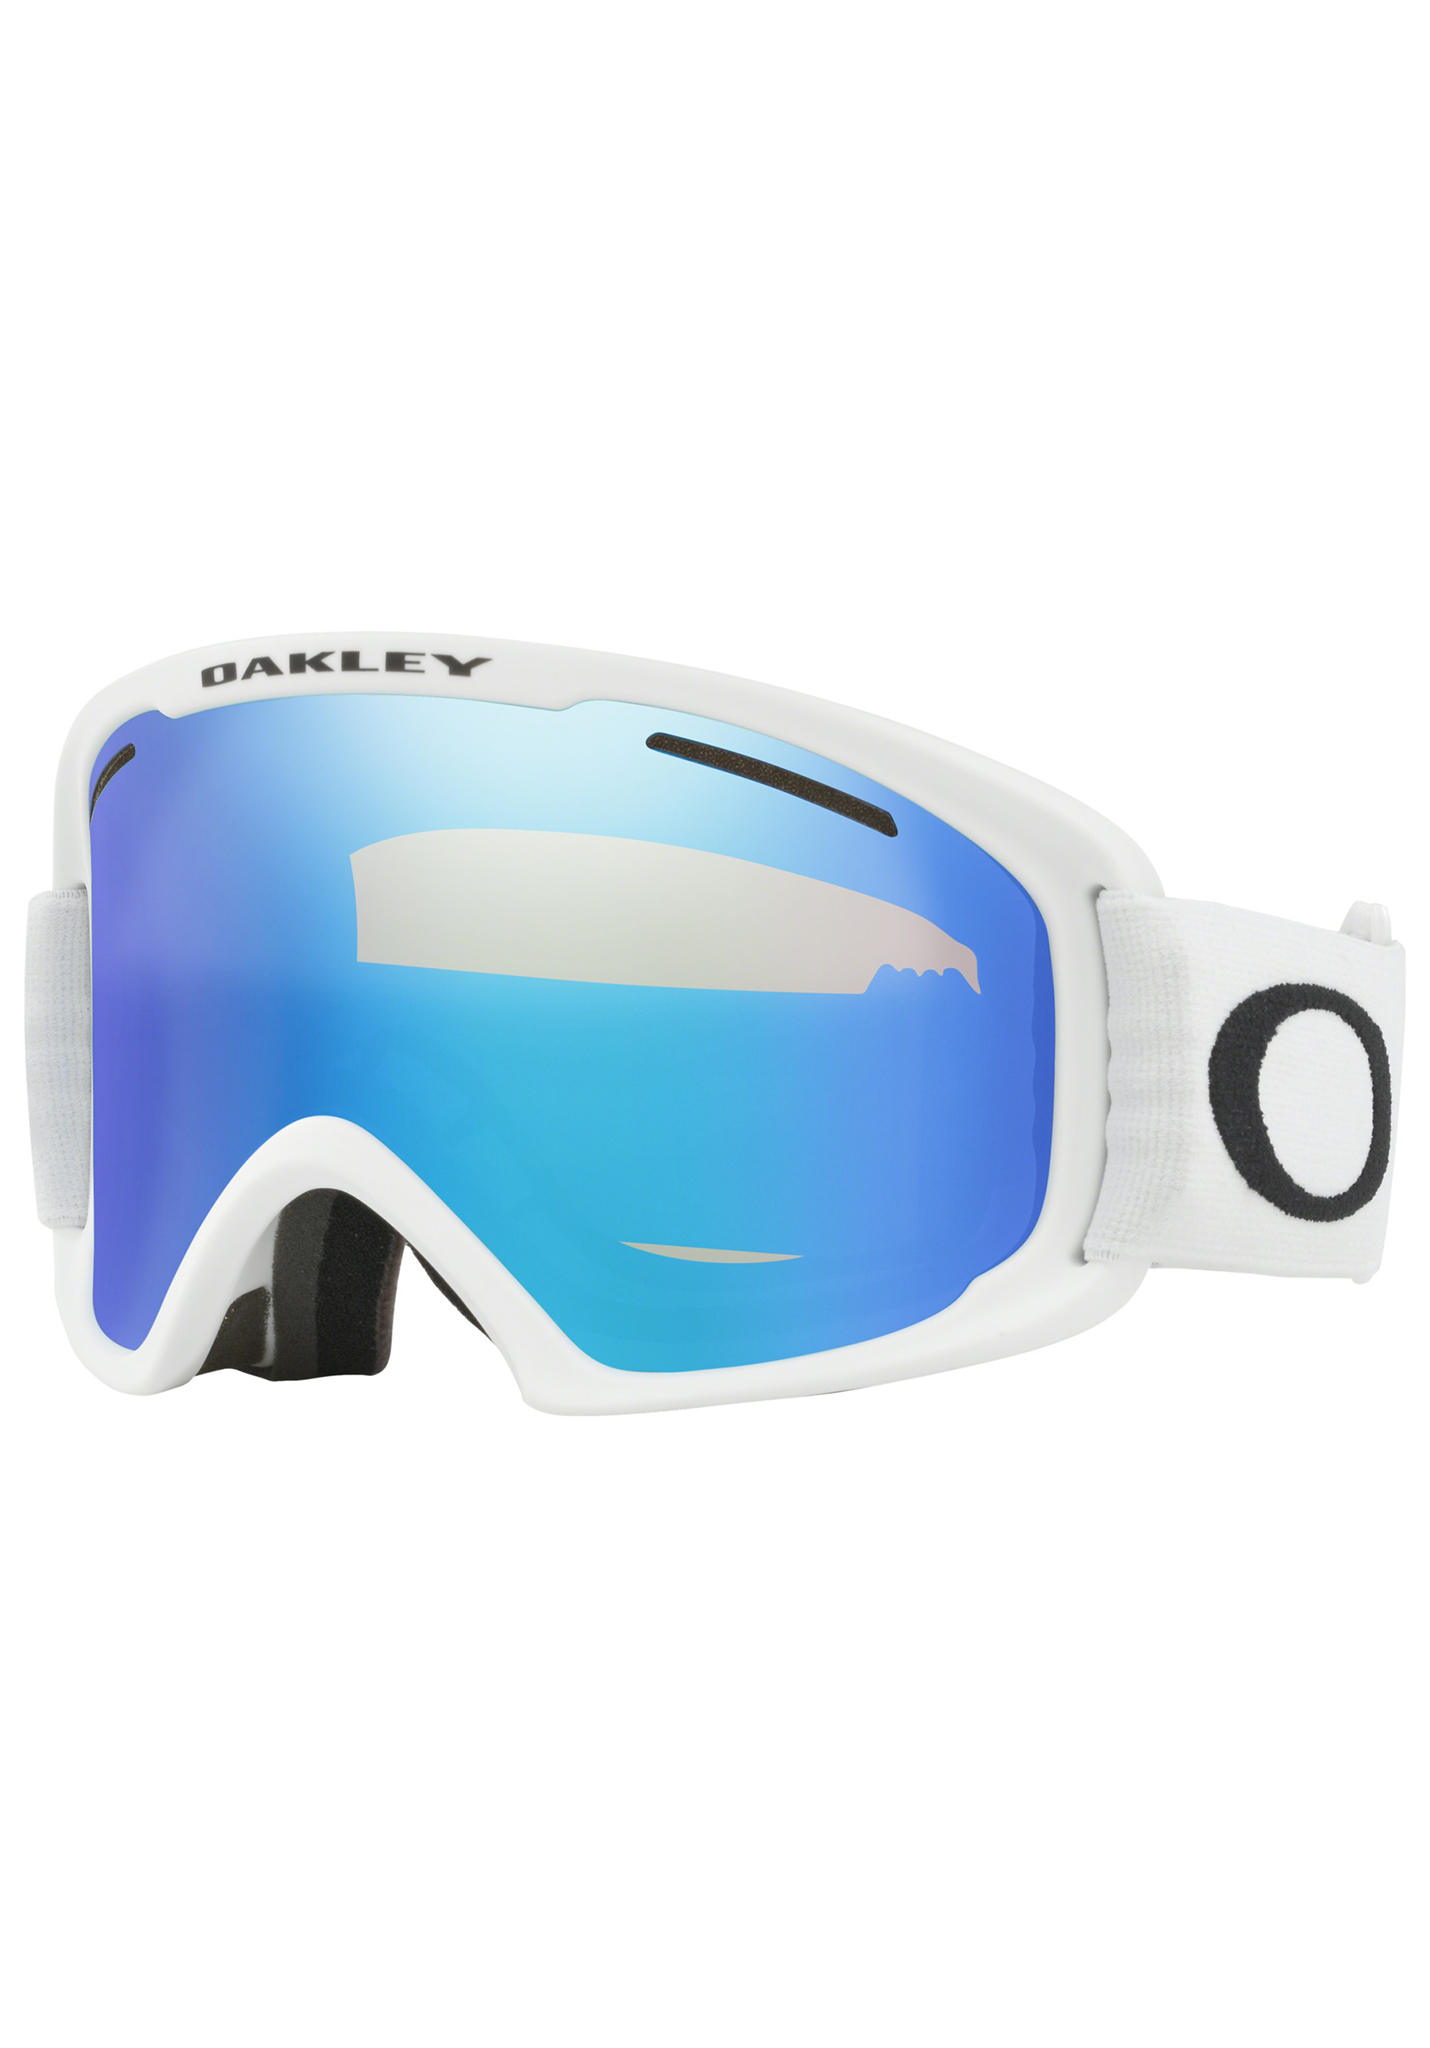 Oakley O Frame 2.0 Pro XL Snowboardbrillen mattweiß/violett iridium & persimmon One Size